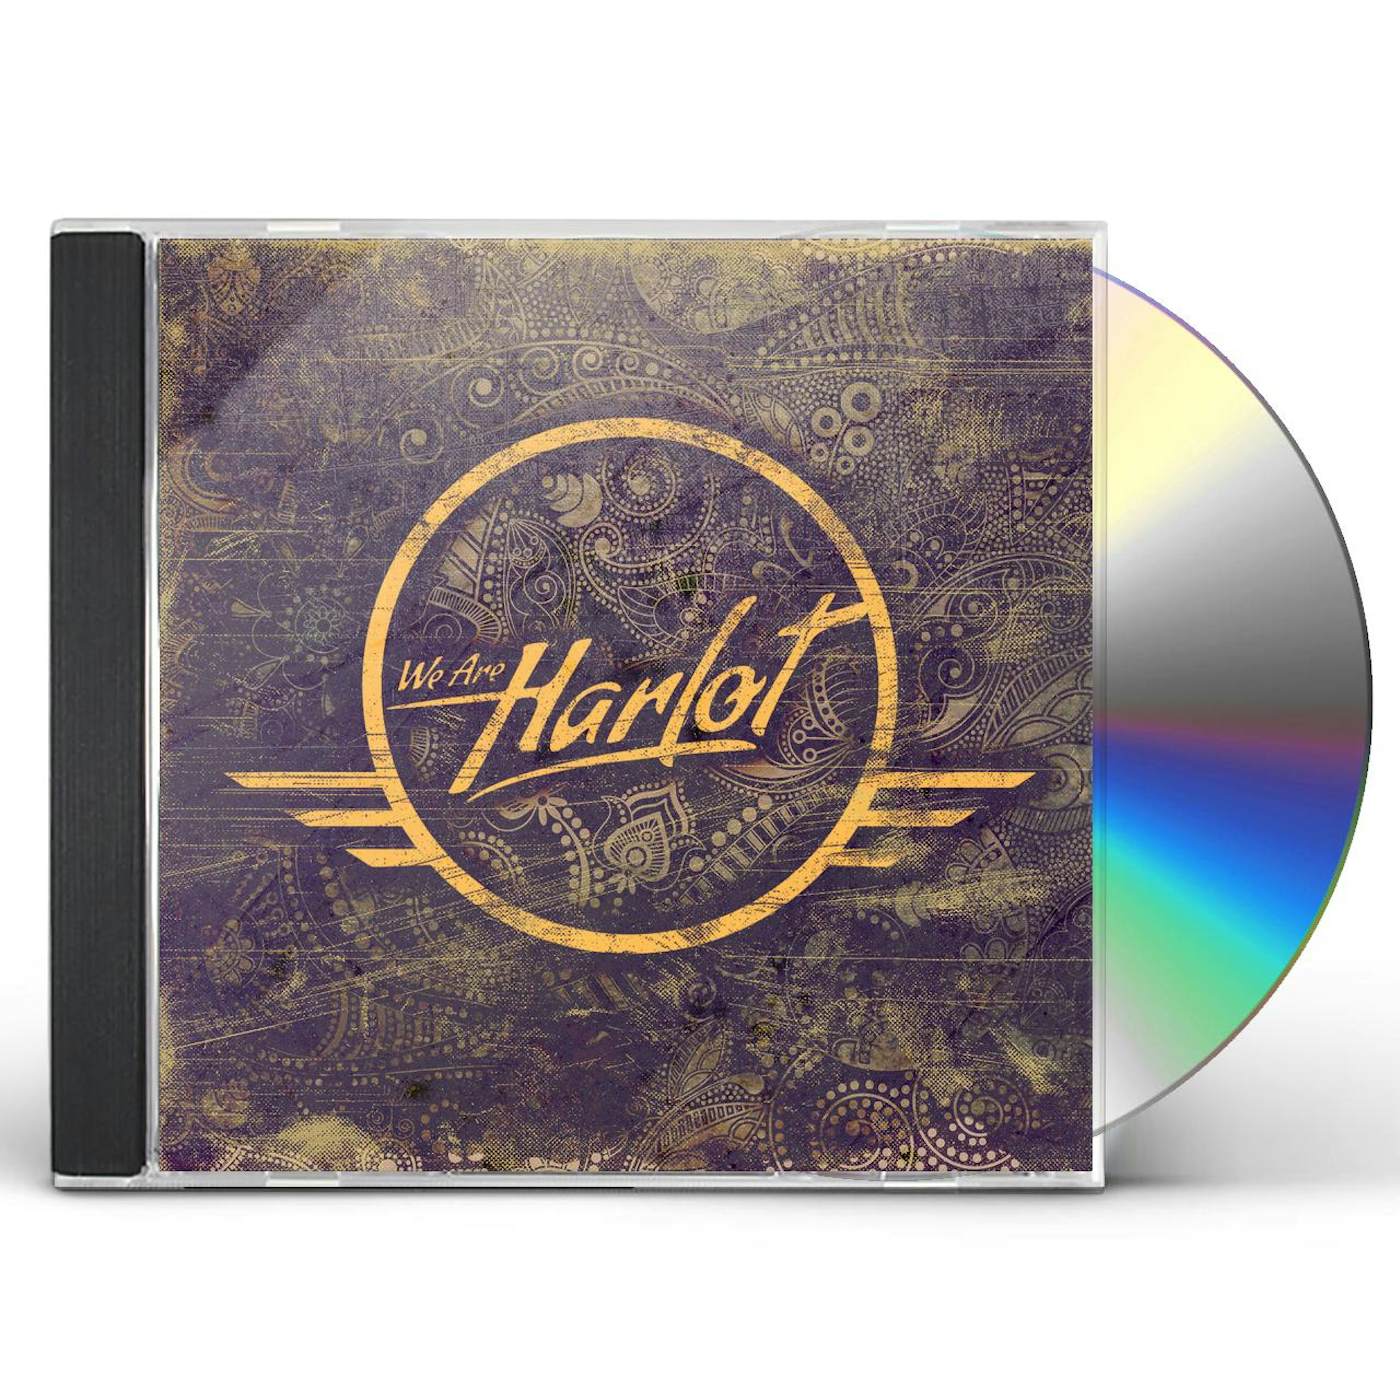 WE ARE HARLOT CD